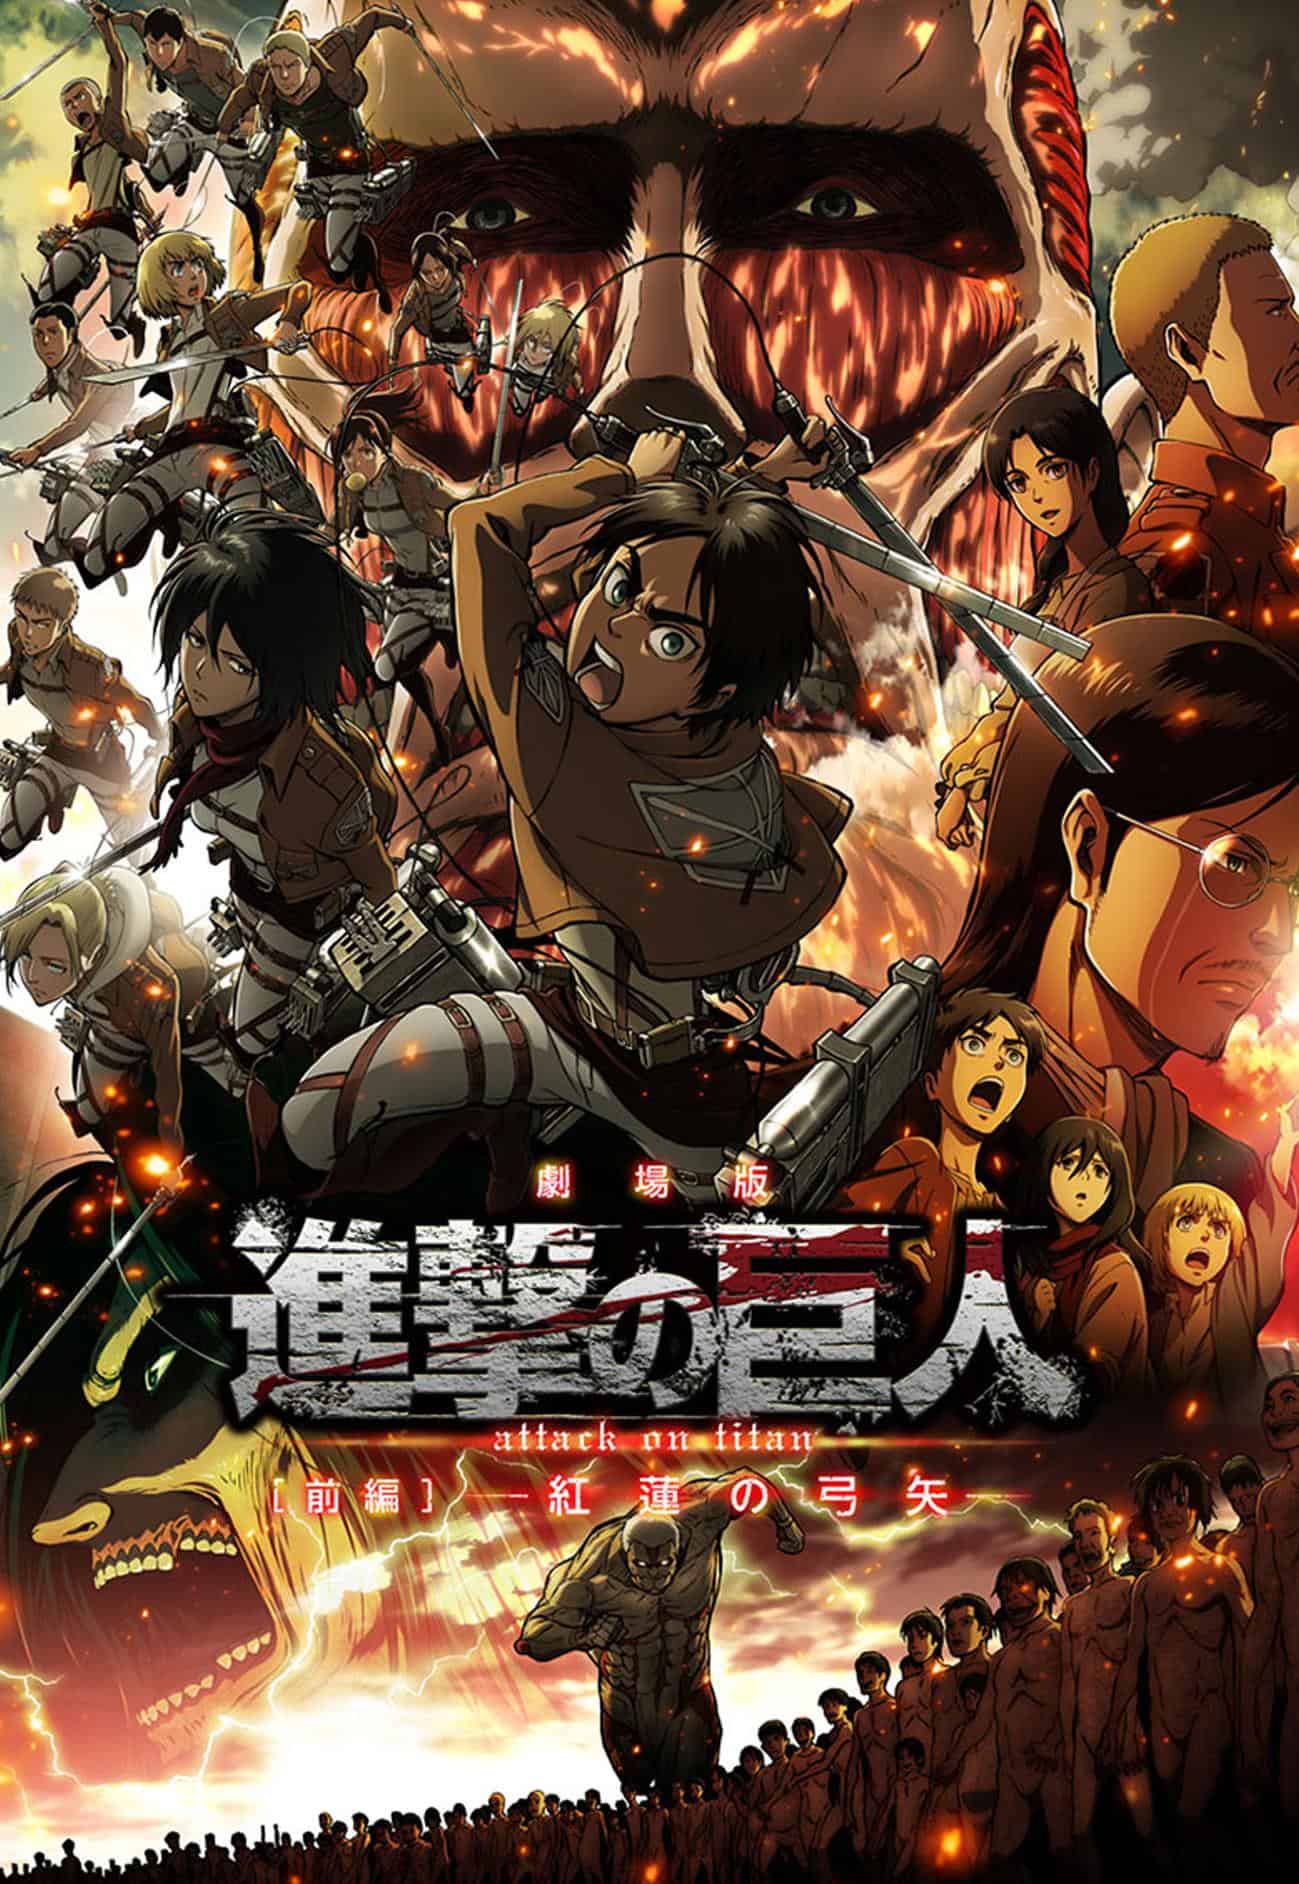 Attack on Titan hd poster